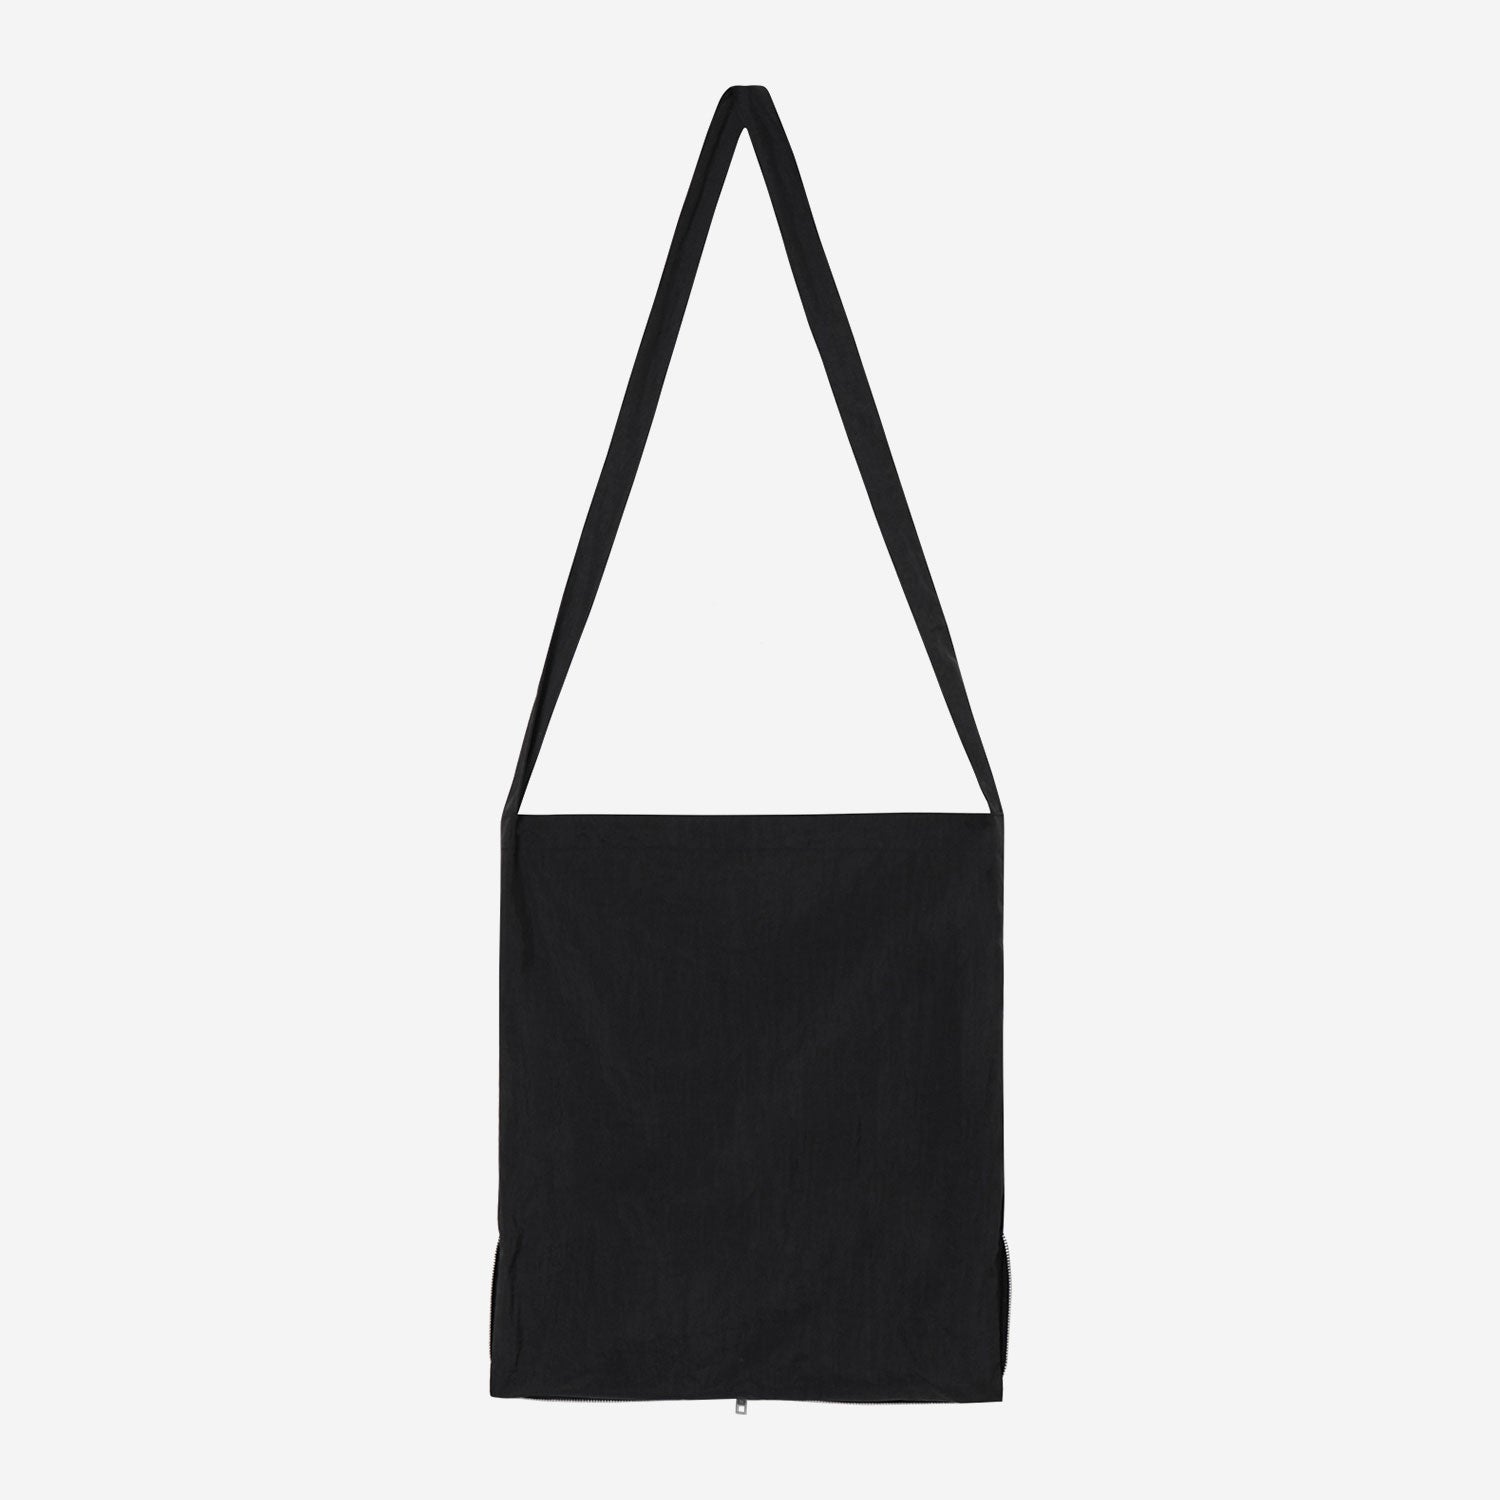 Portablebag / black × silver